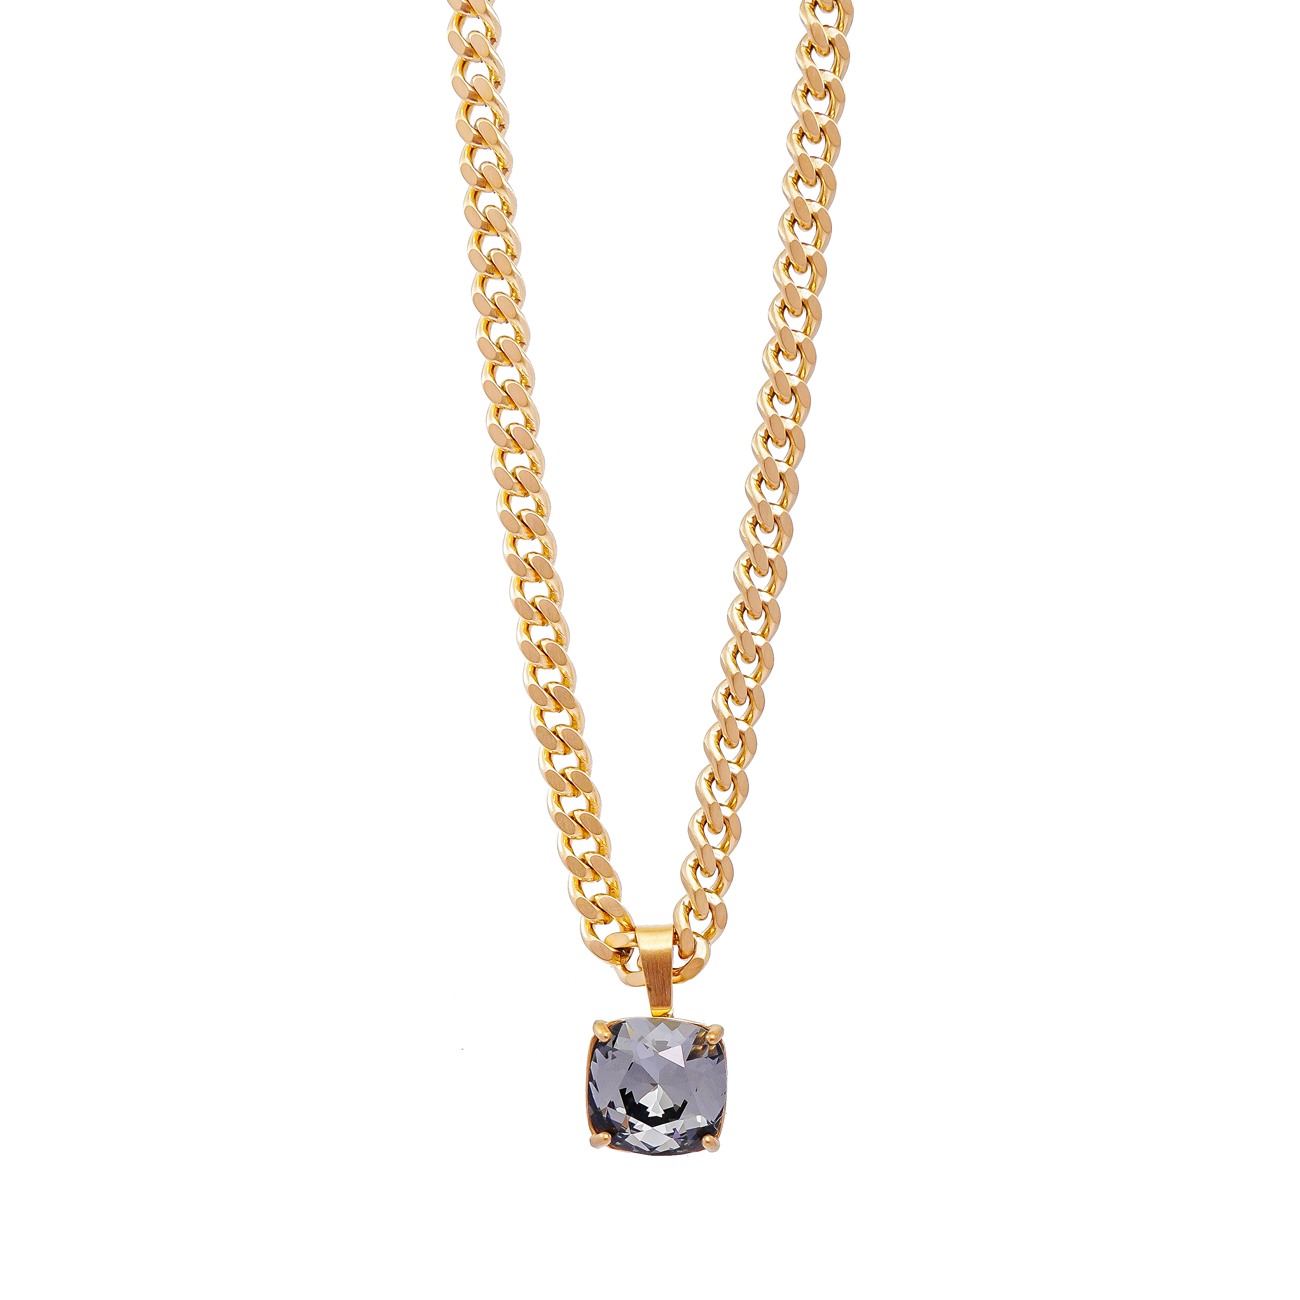 Carla Swarovski chain necklace - Charcoal